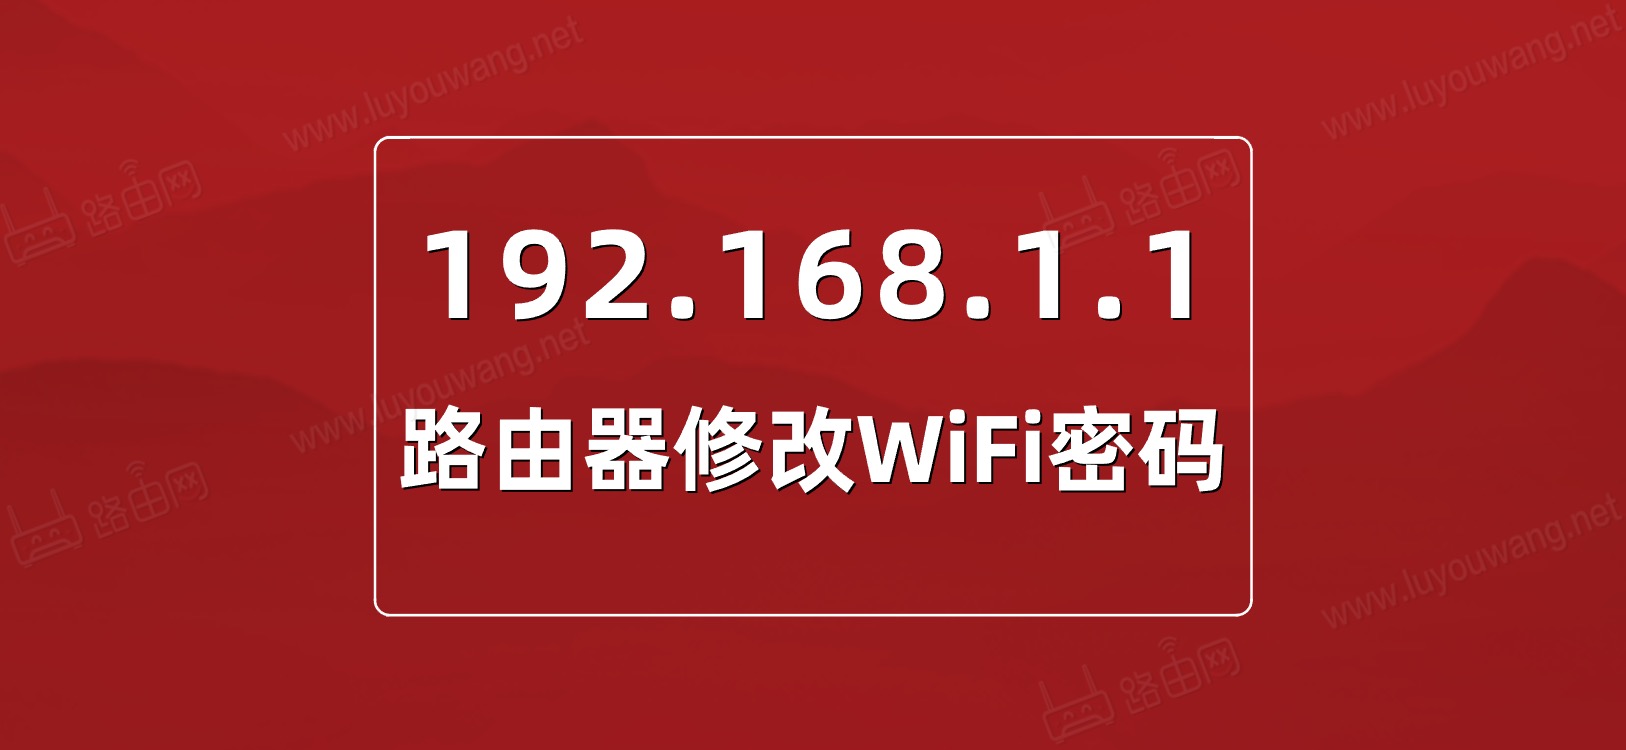 http//:192.168.1.1进入路由器修改wifi密码